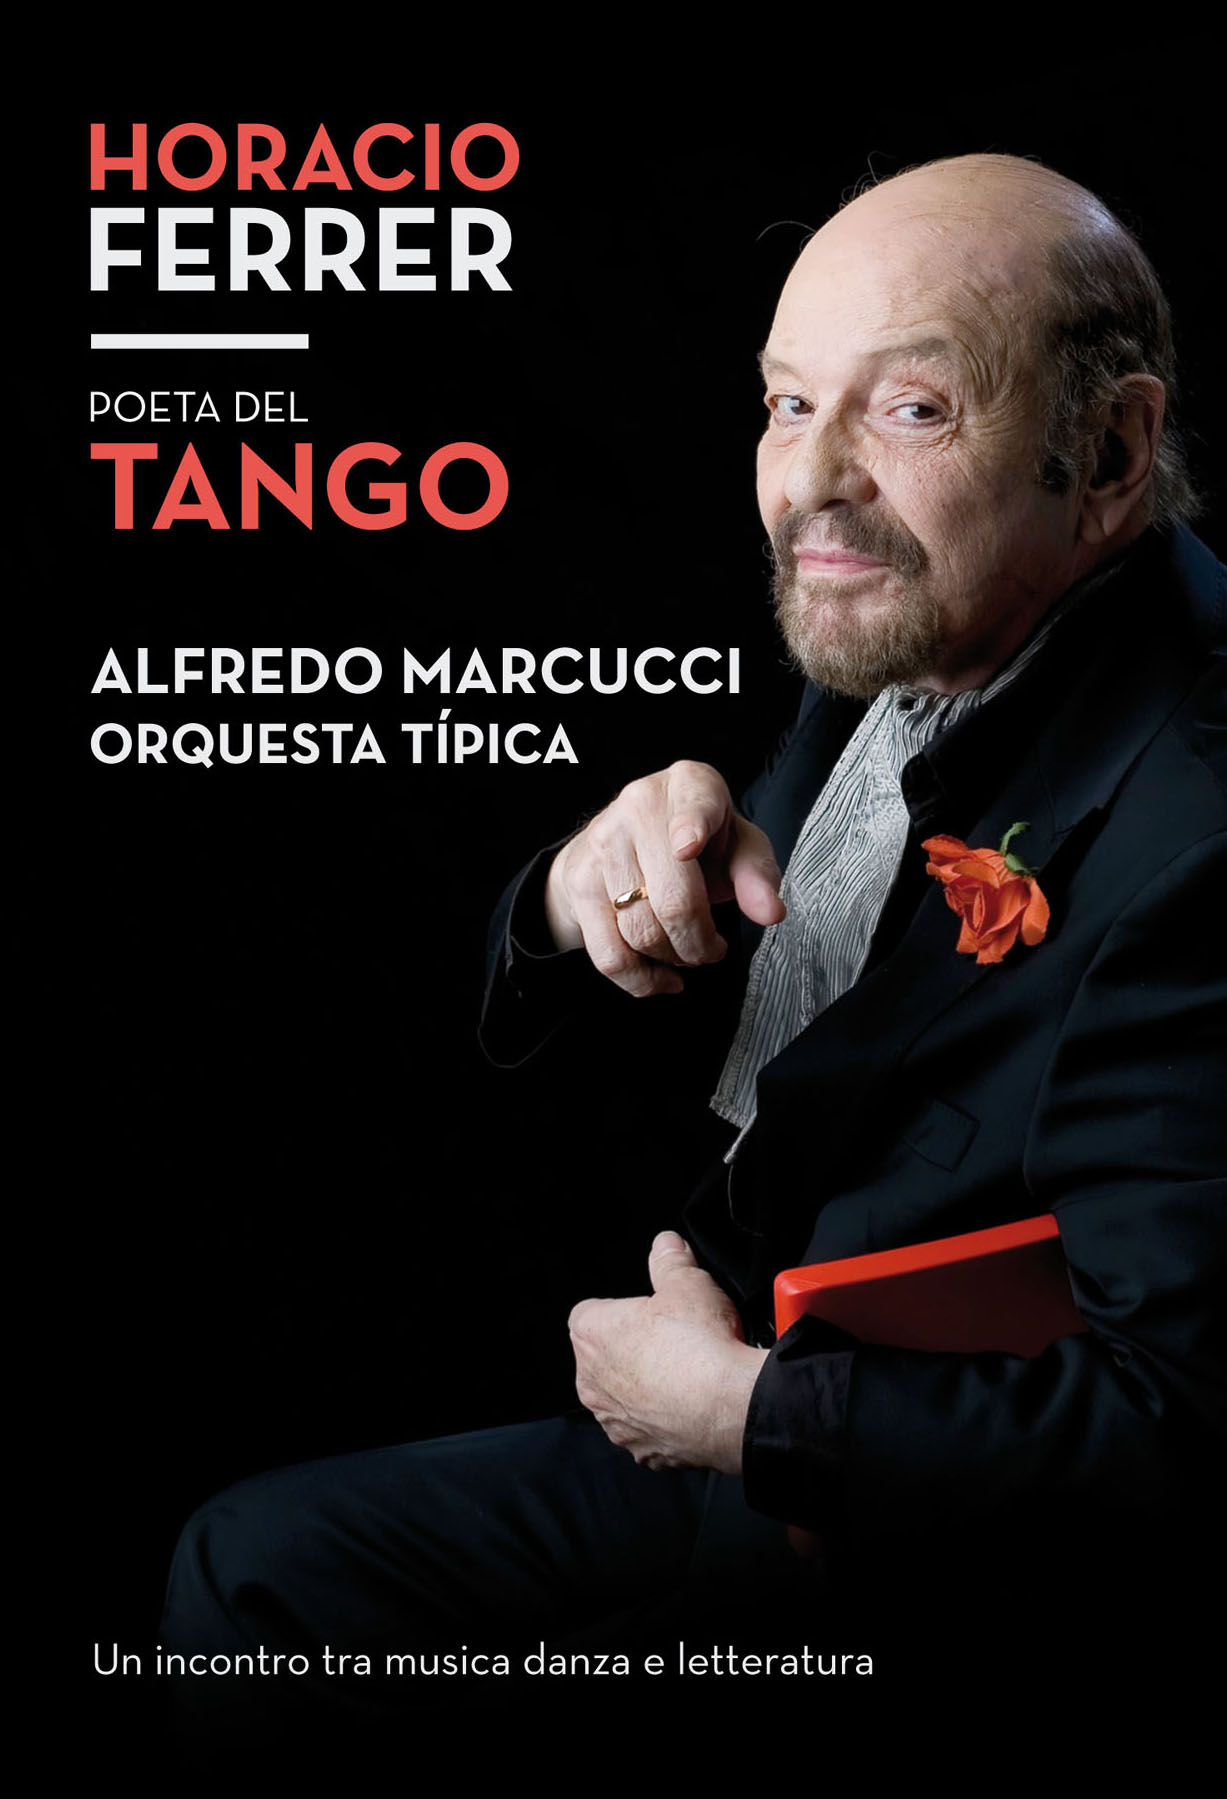 DVD Horacio Ferrer poeta del tango